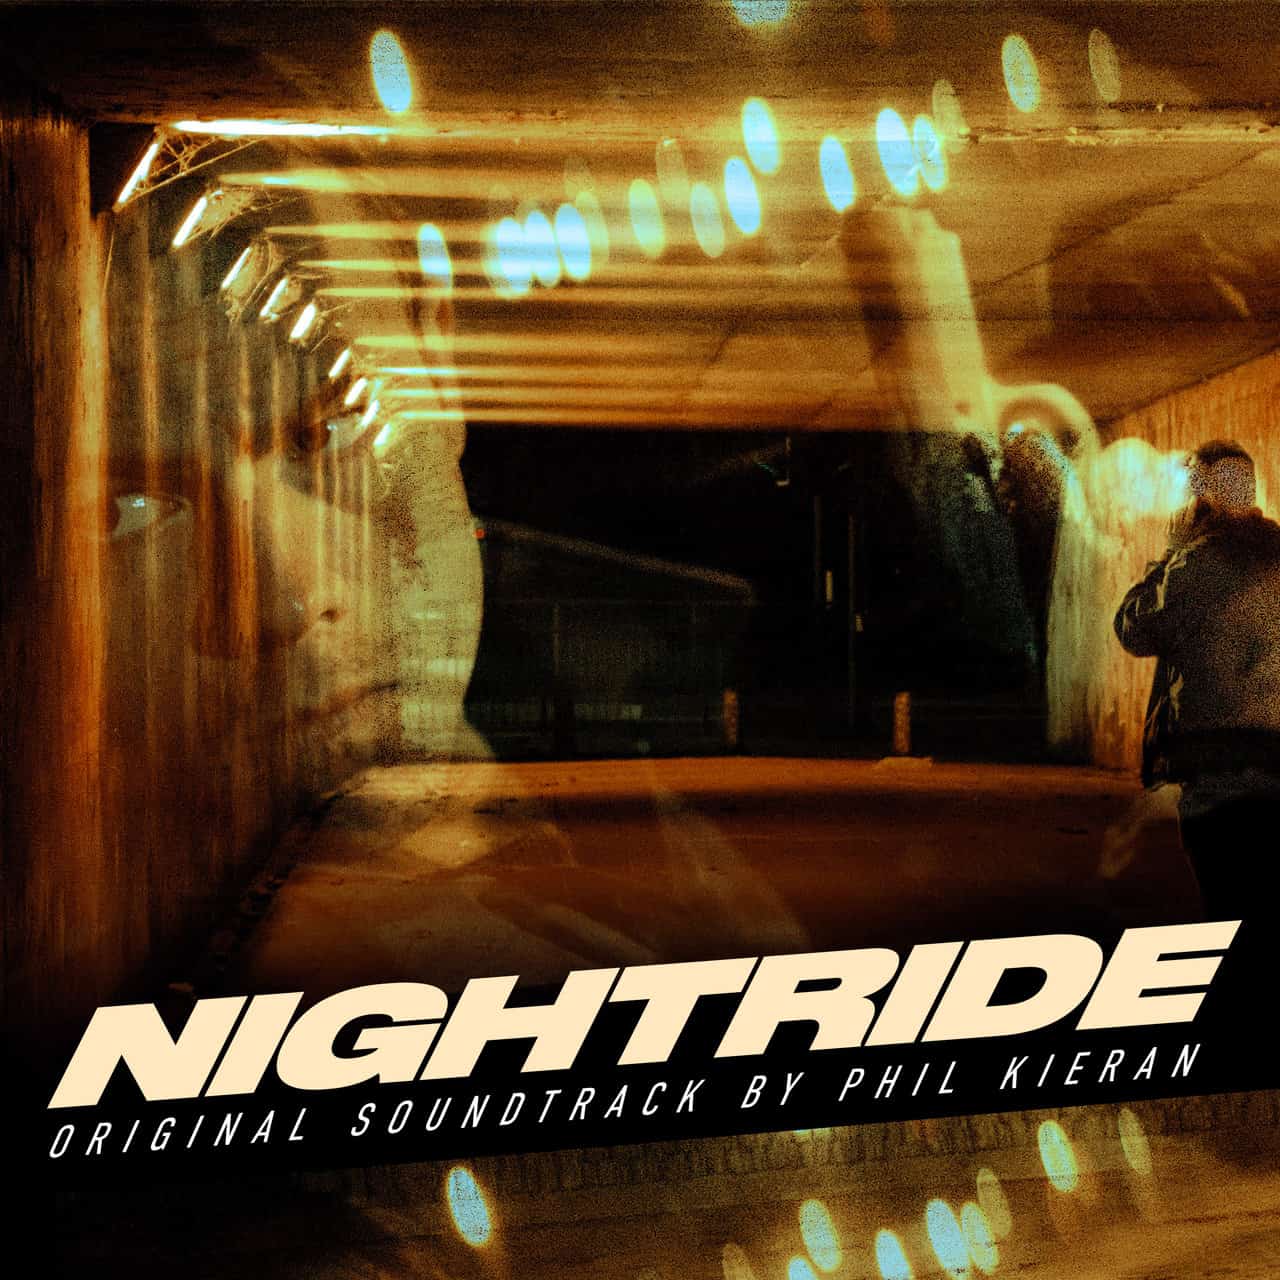 image cover: Phil Kieran - Nightride Soundtrack / Phil Kieran Recordings